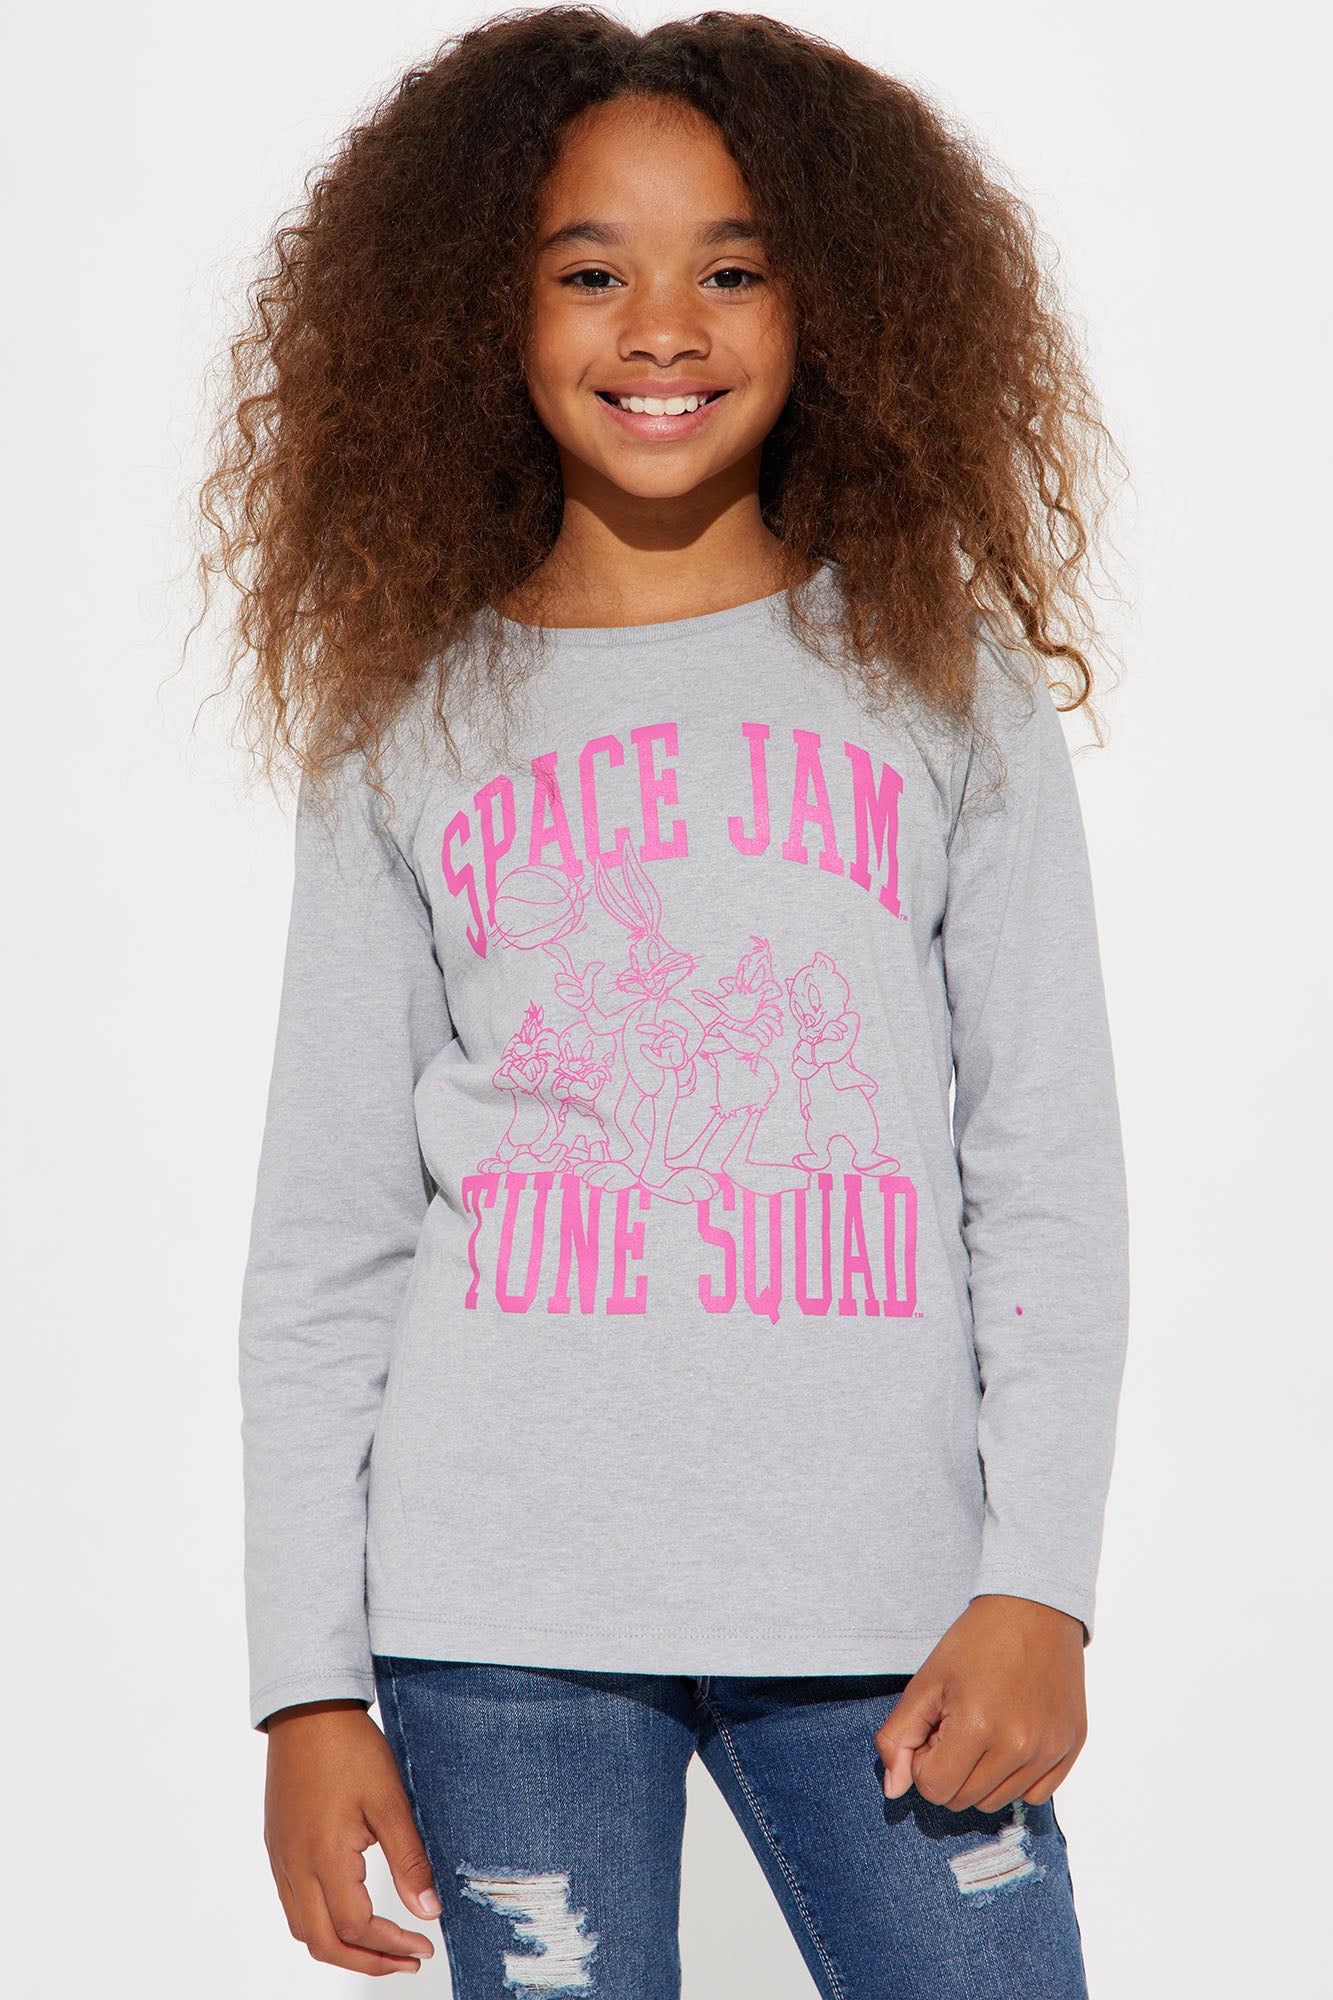 Mini Space Jam Tune Squad Long Sleeve Tee - Grey | Fashion Nova, Kids Tops  & T-Shirts | Fashion Nova